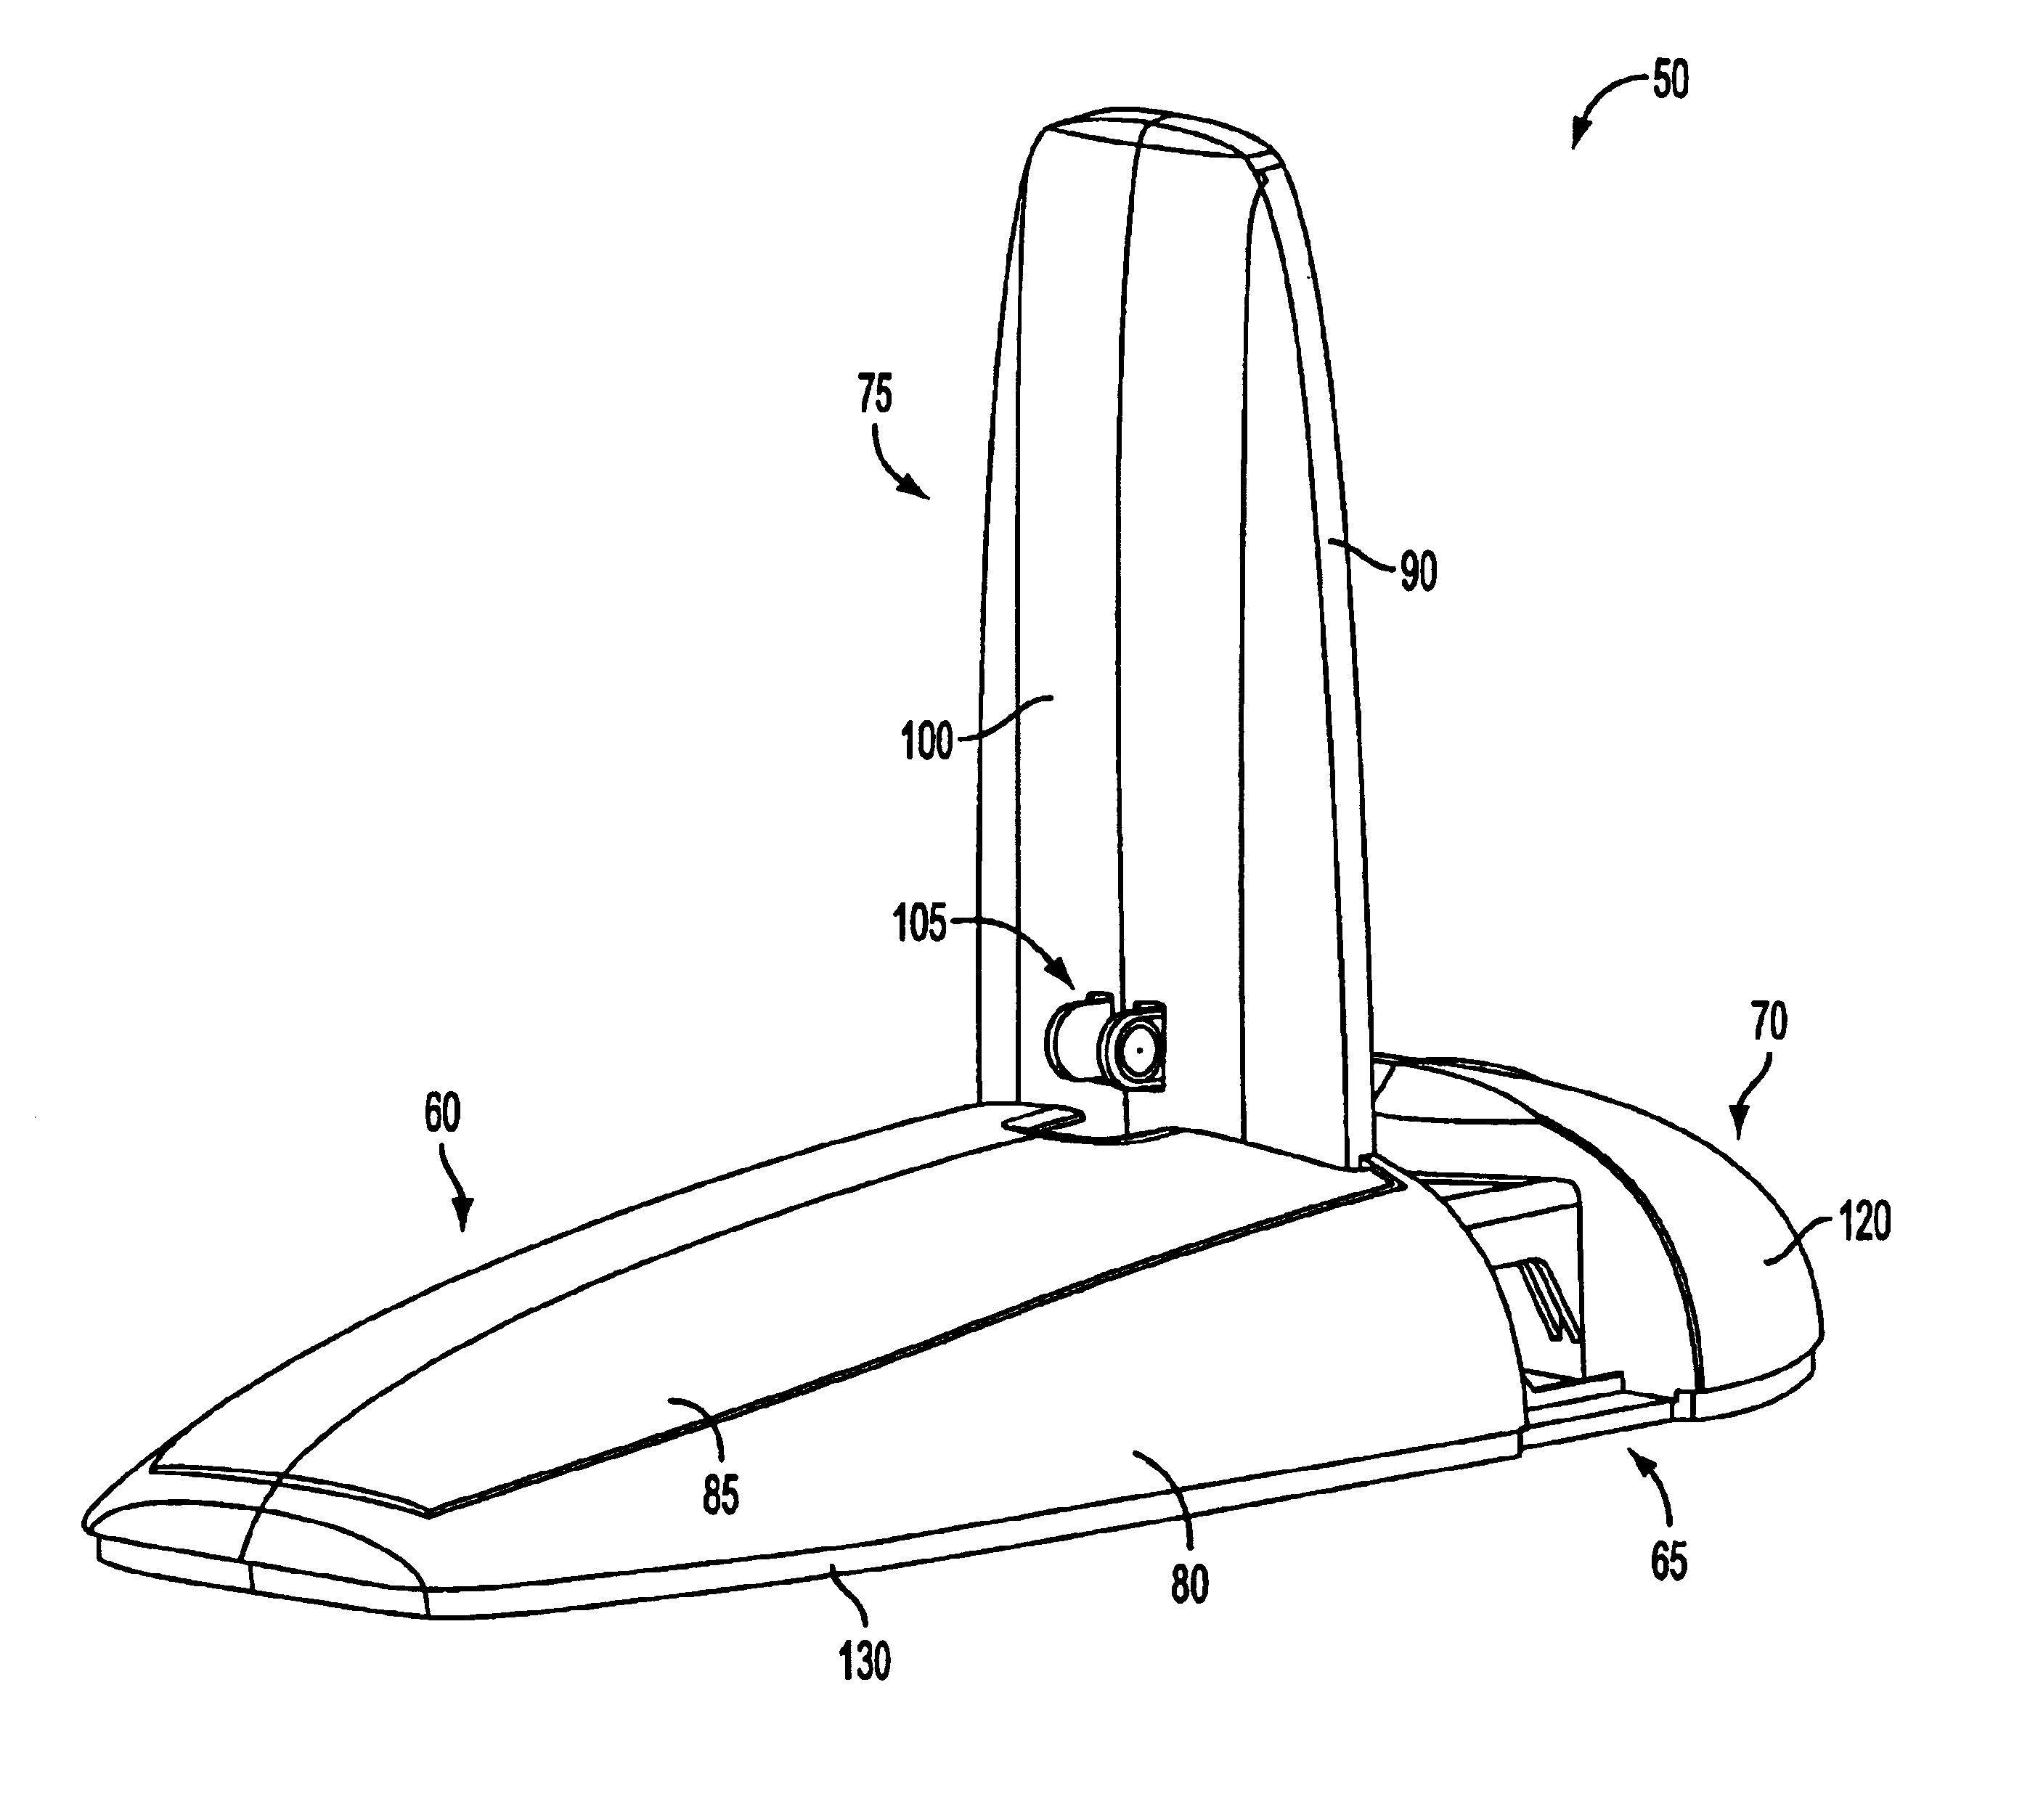 Portable computer pedestal method and apparatus